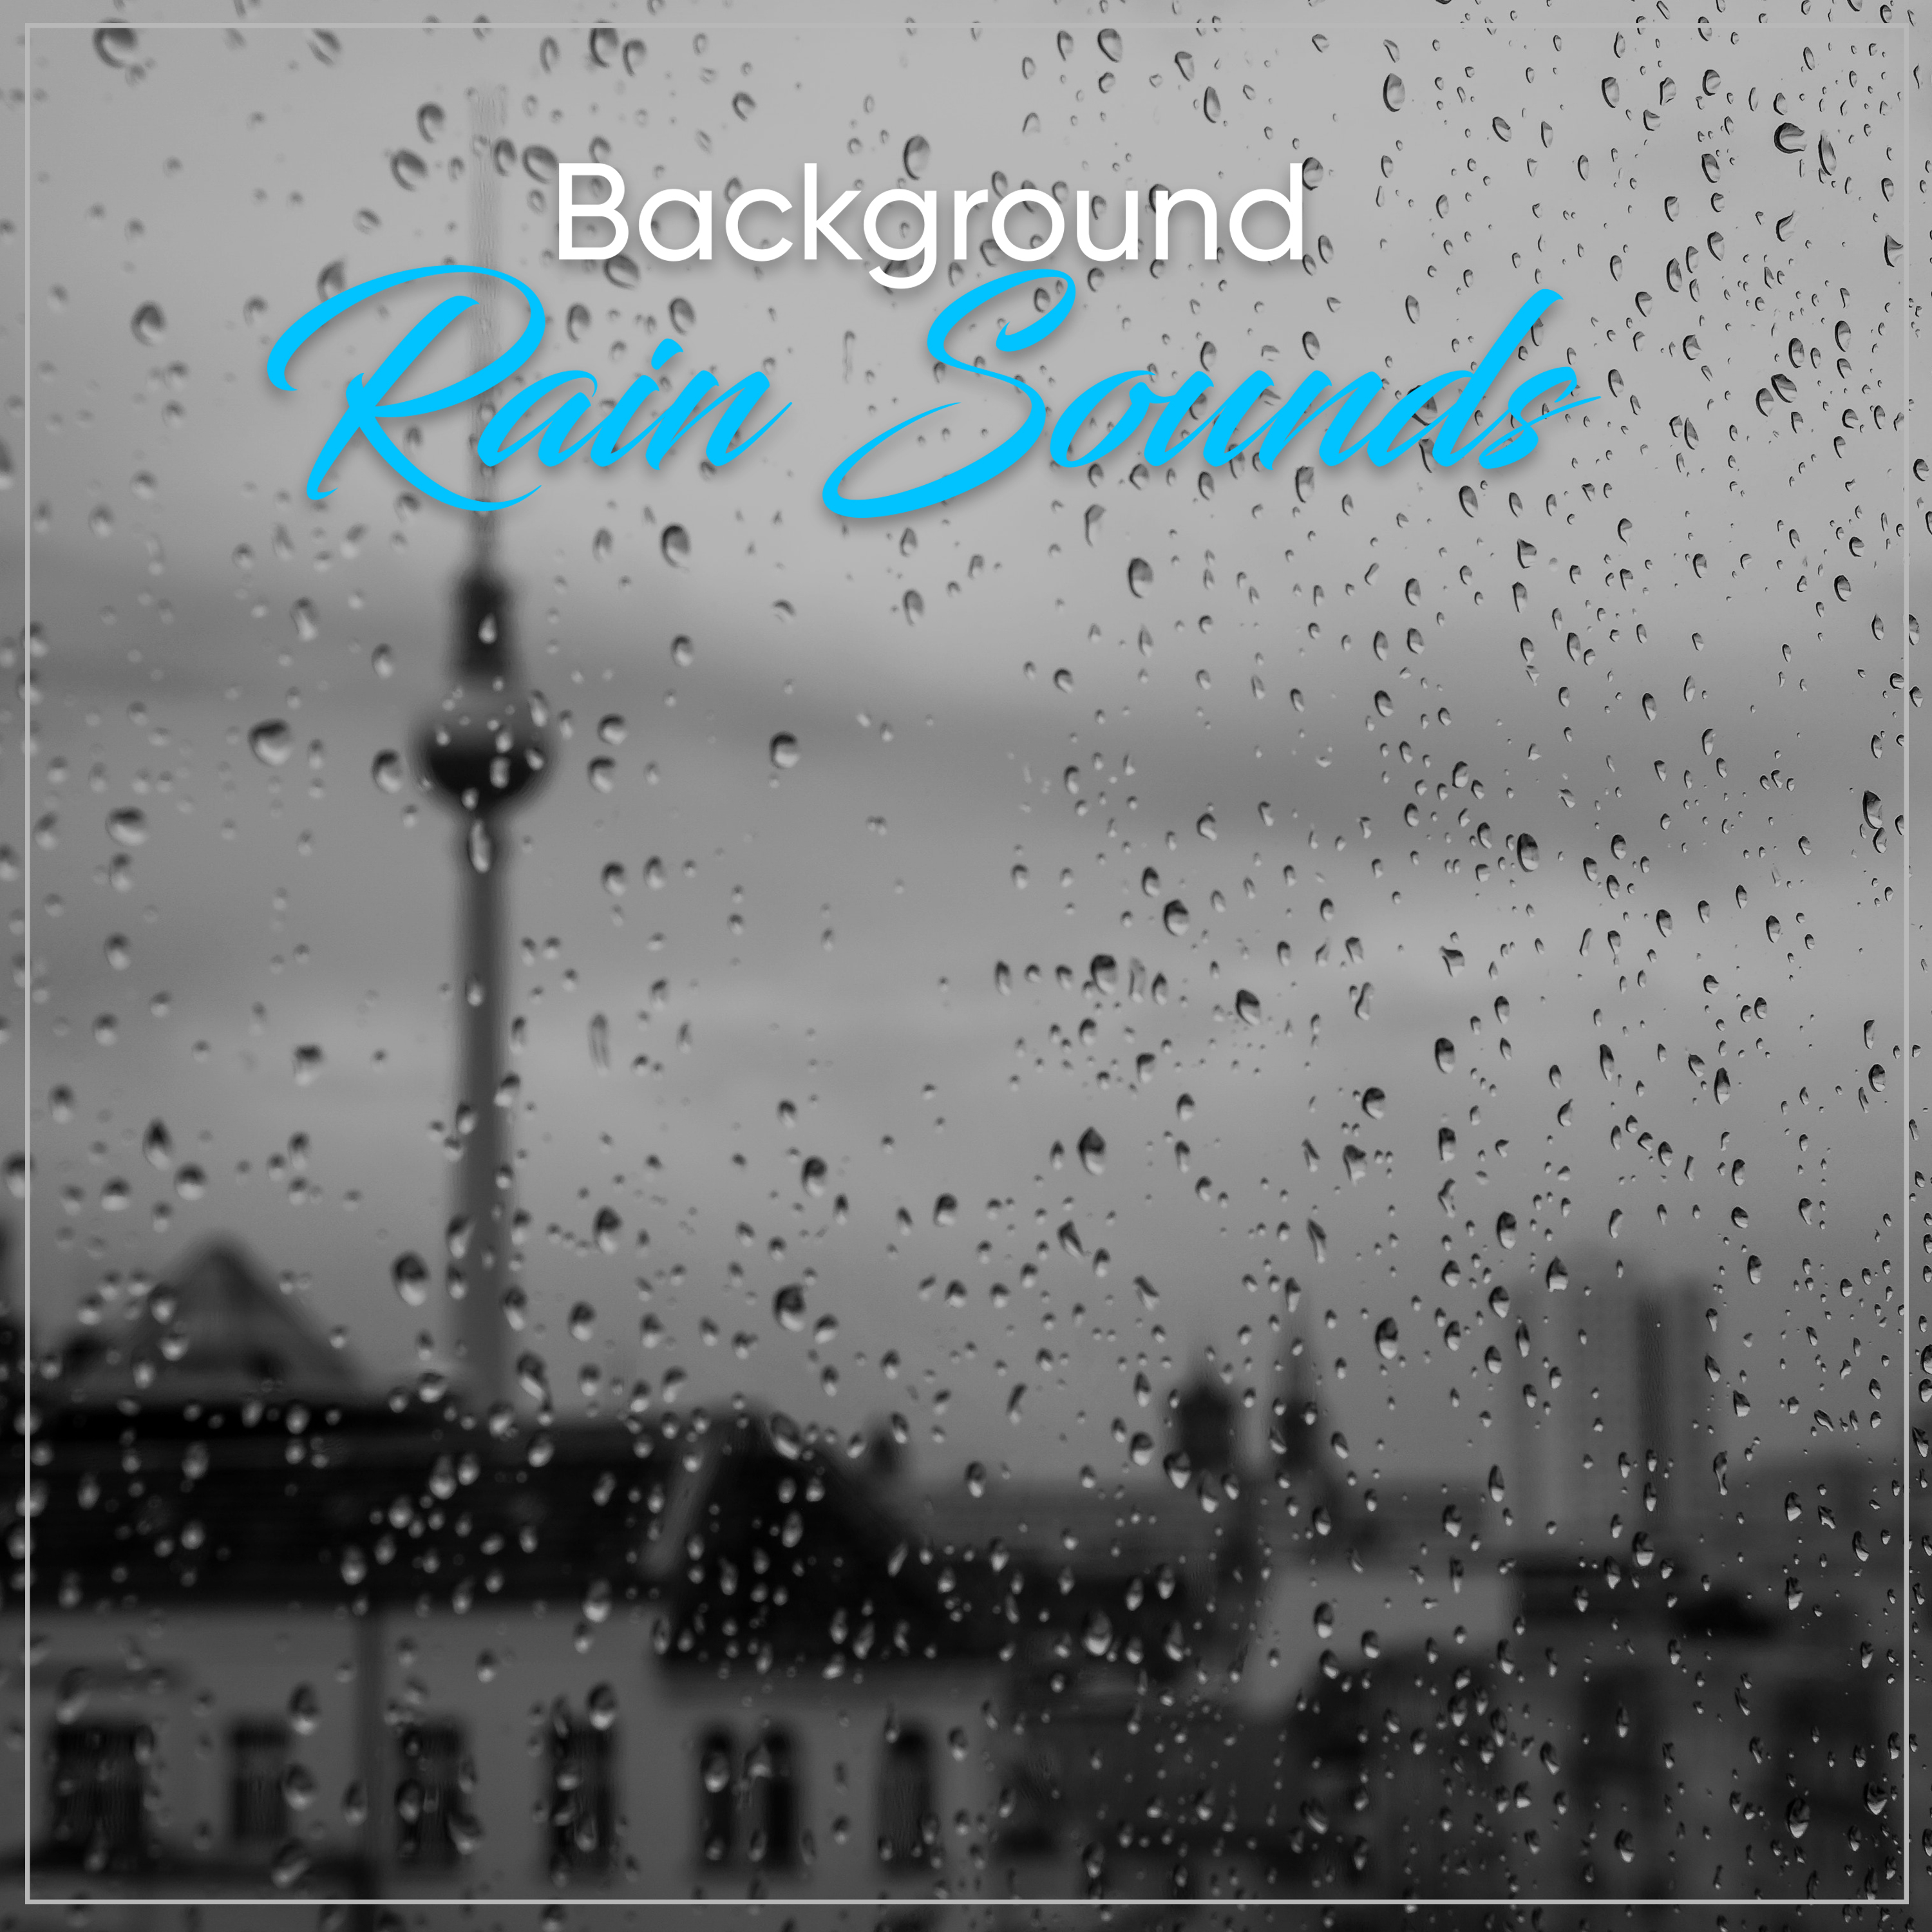 12 Rain Sounds & Nature Sounds - Heavy Rain and Thunder